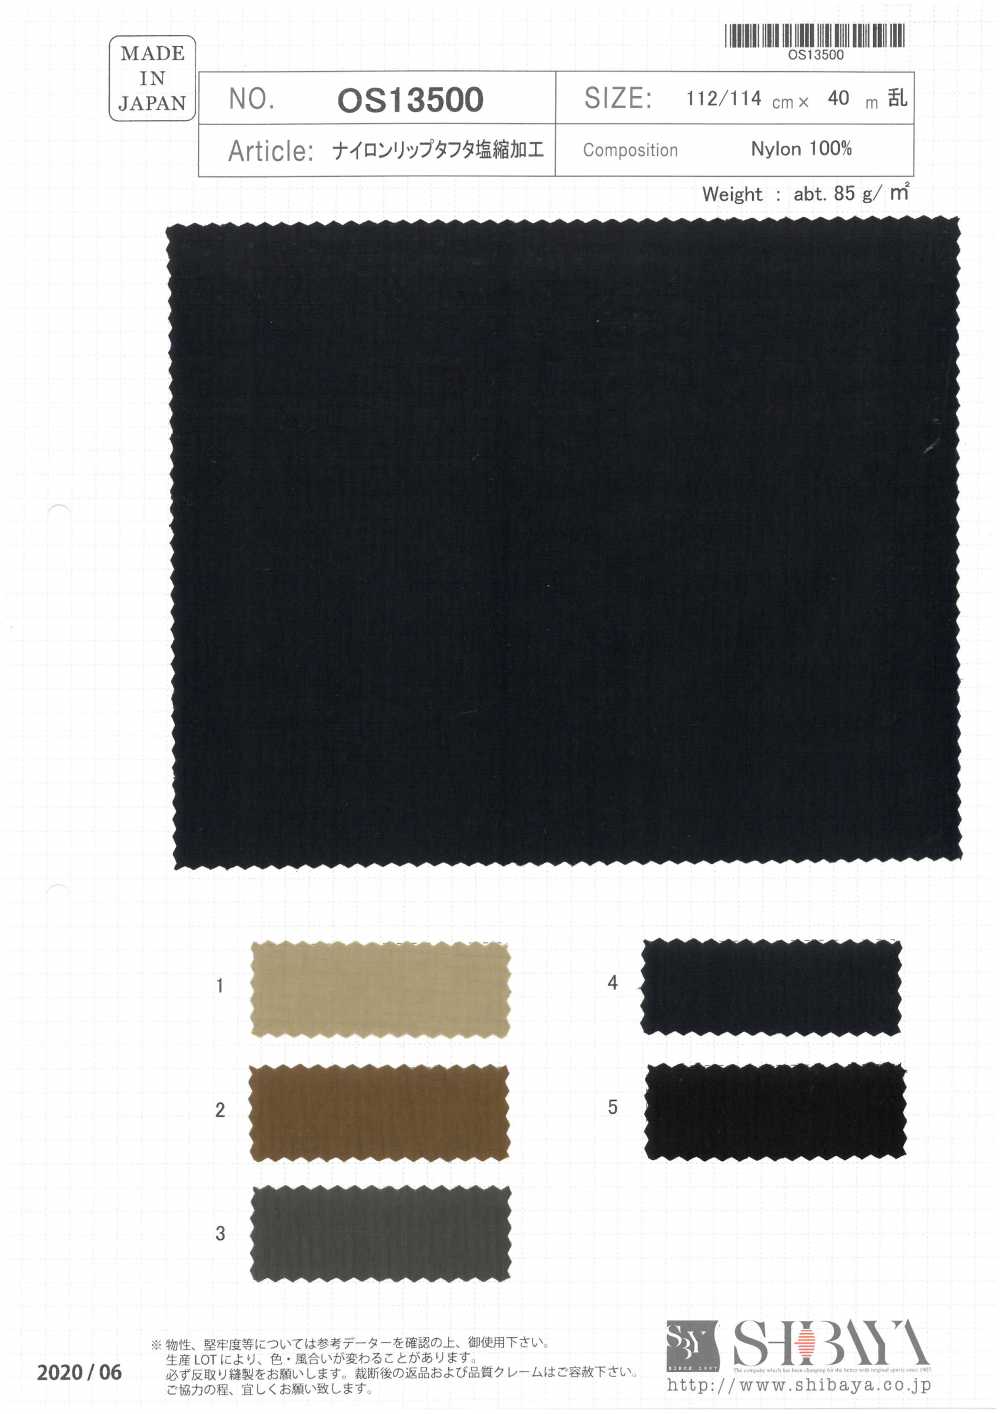 OS13500 Nylon Lip Taffeta Salt Shrink Processing[Textile / Fabric] SHIBAYA